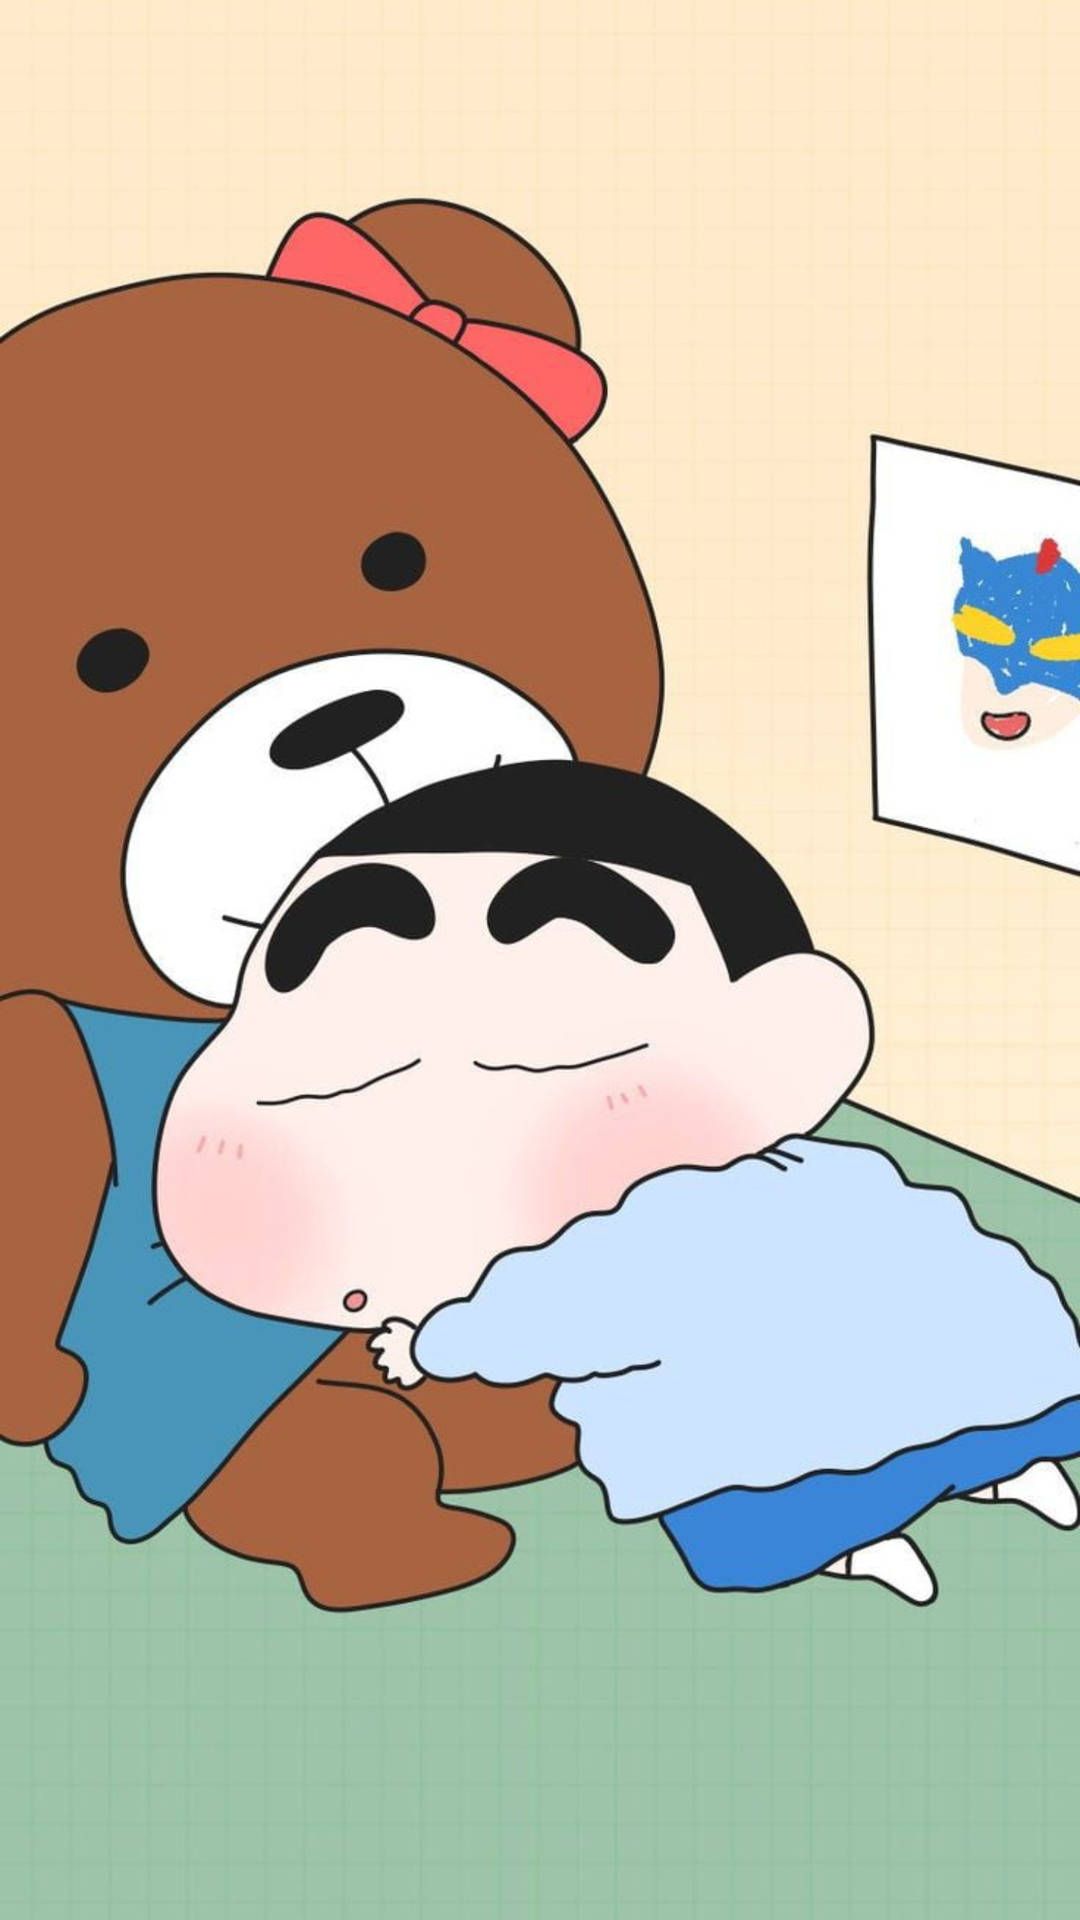 A phone wallpaper of Shin Chan sleeping with a teddy bear - Teddy bear